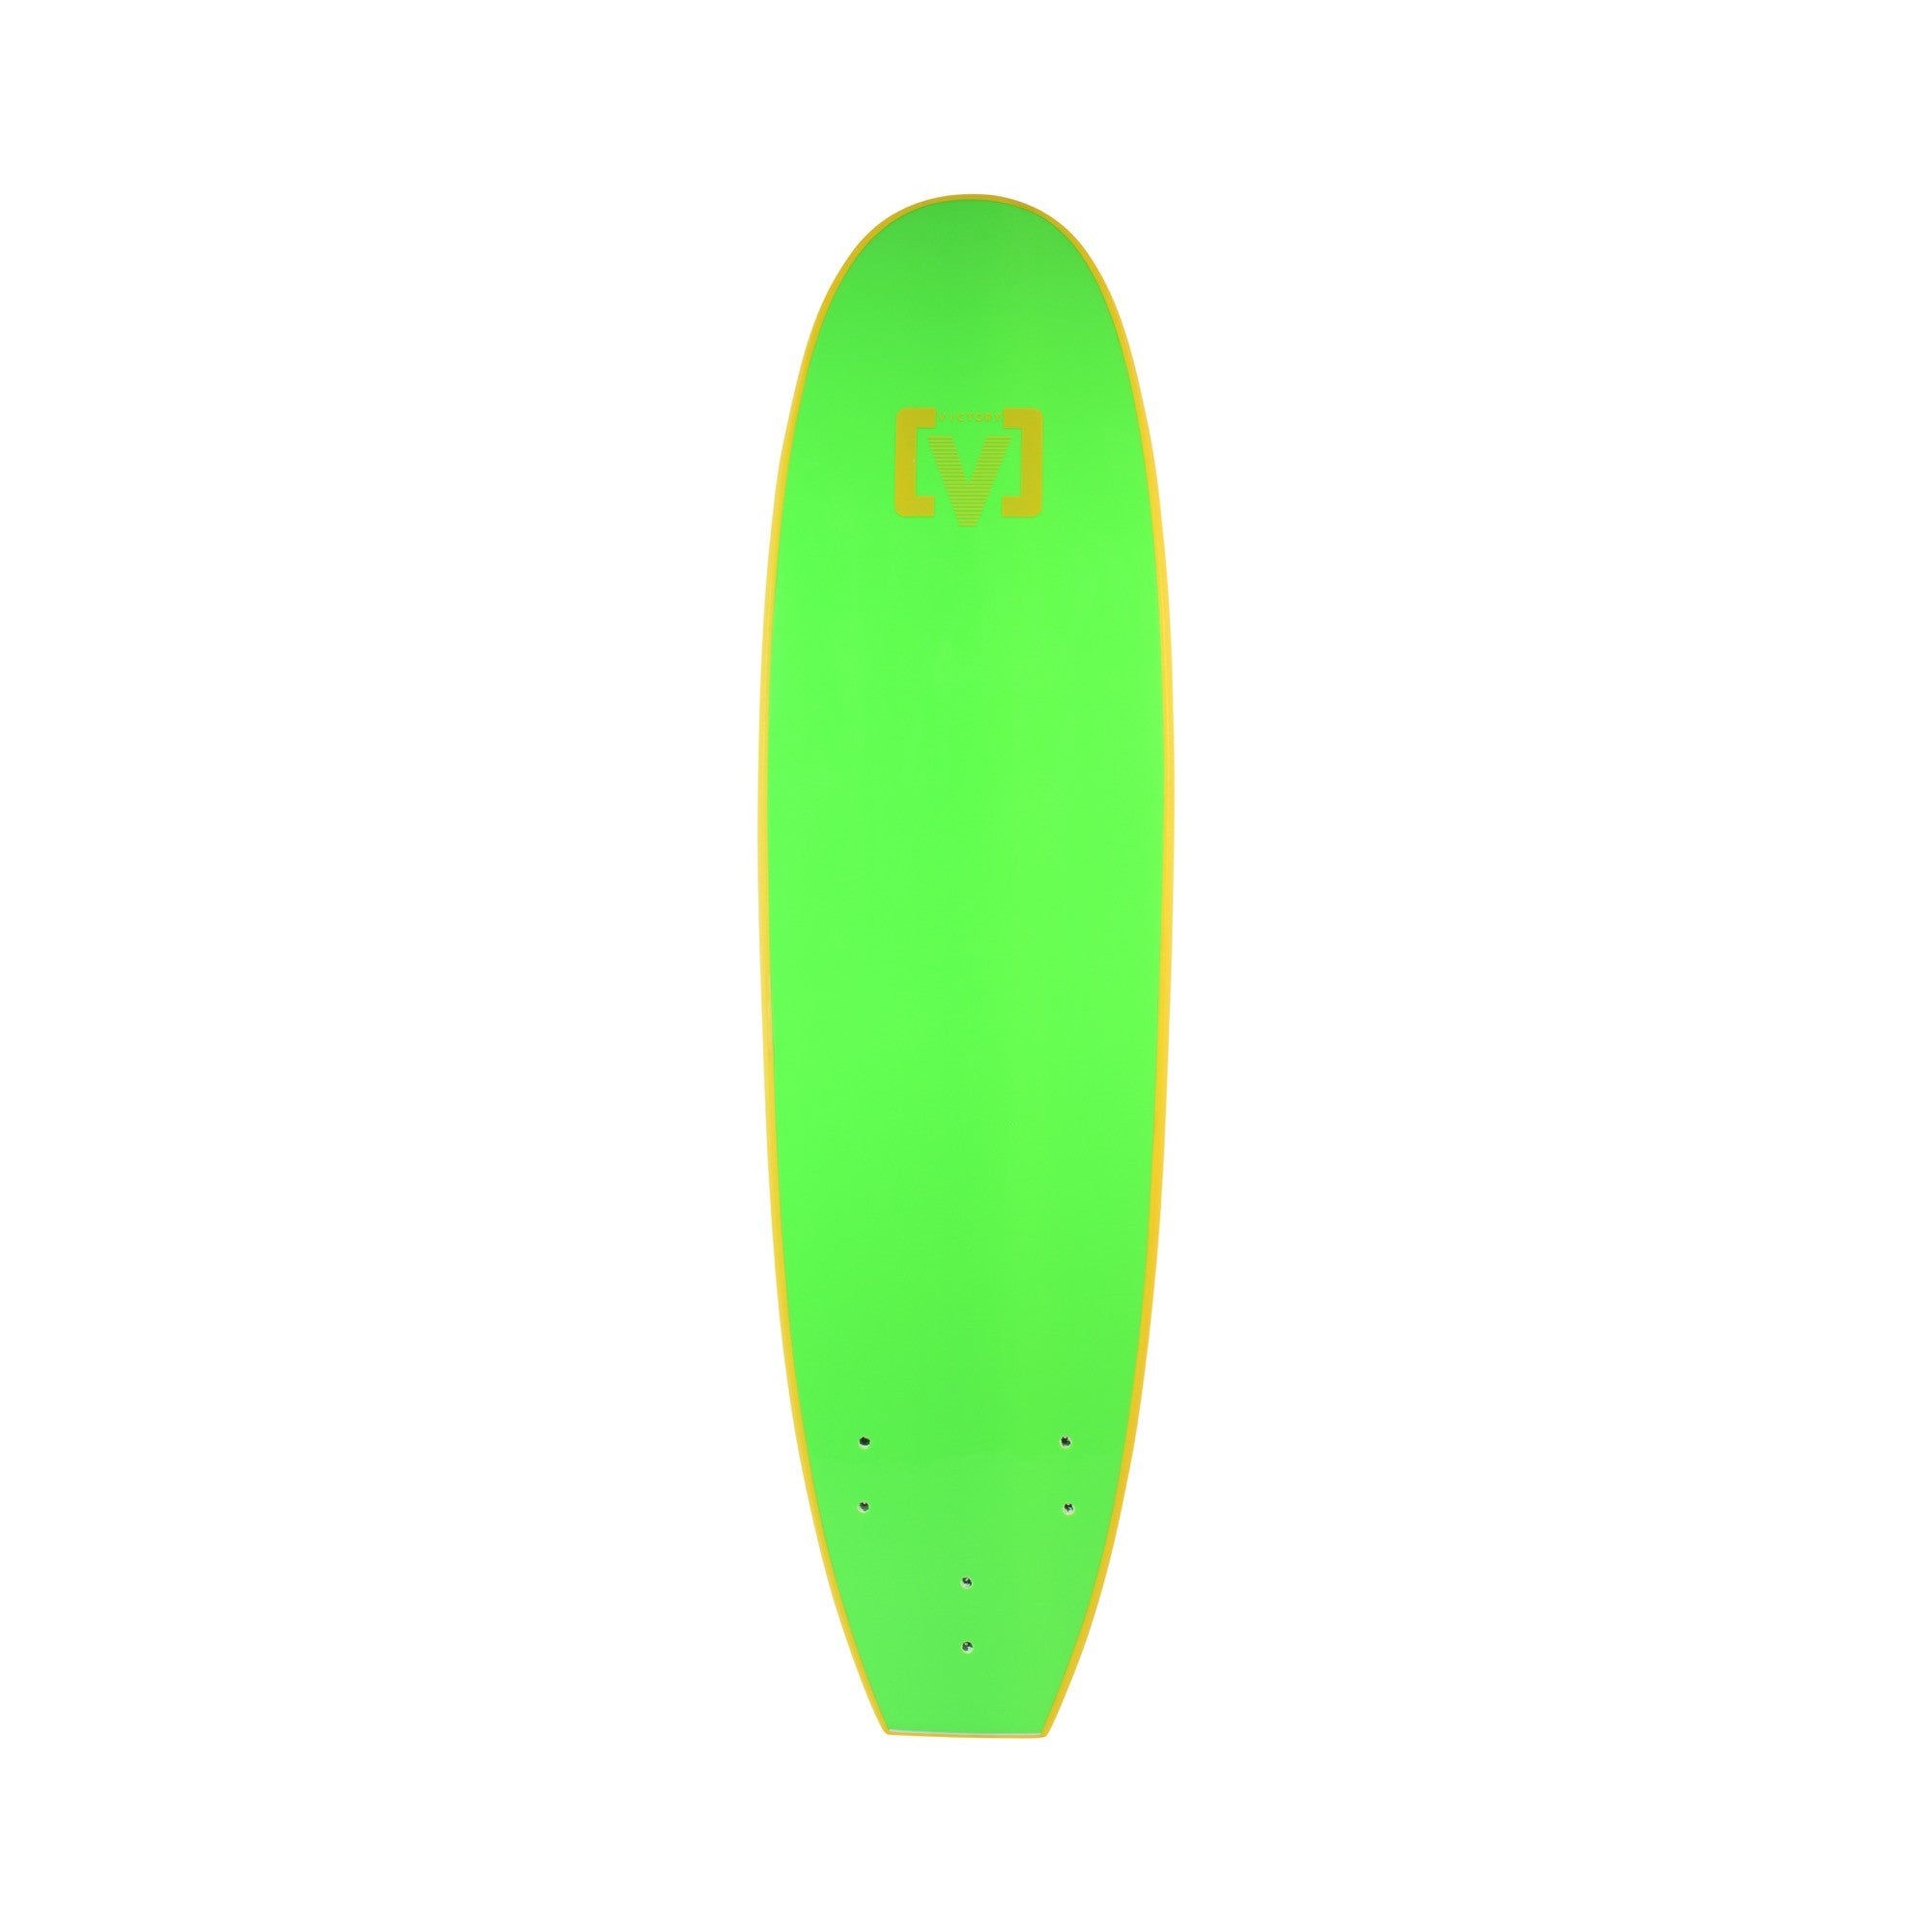 VICTORY - EPS Softboard - Foam Surfboard - Malibu High Volume 7'0 - Yellow